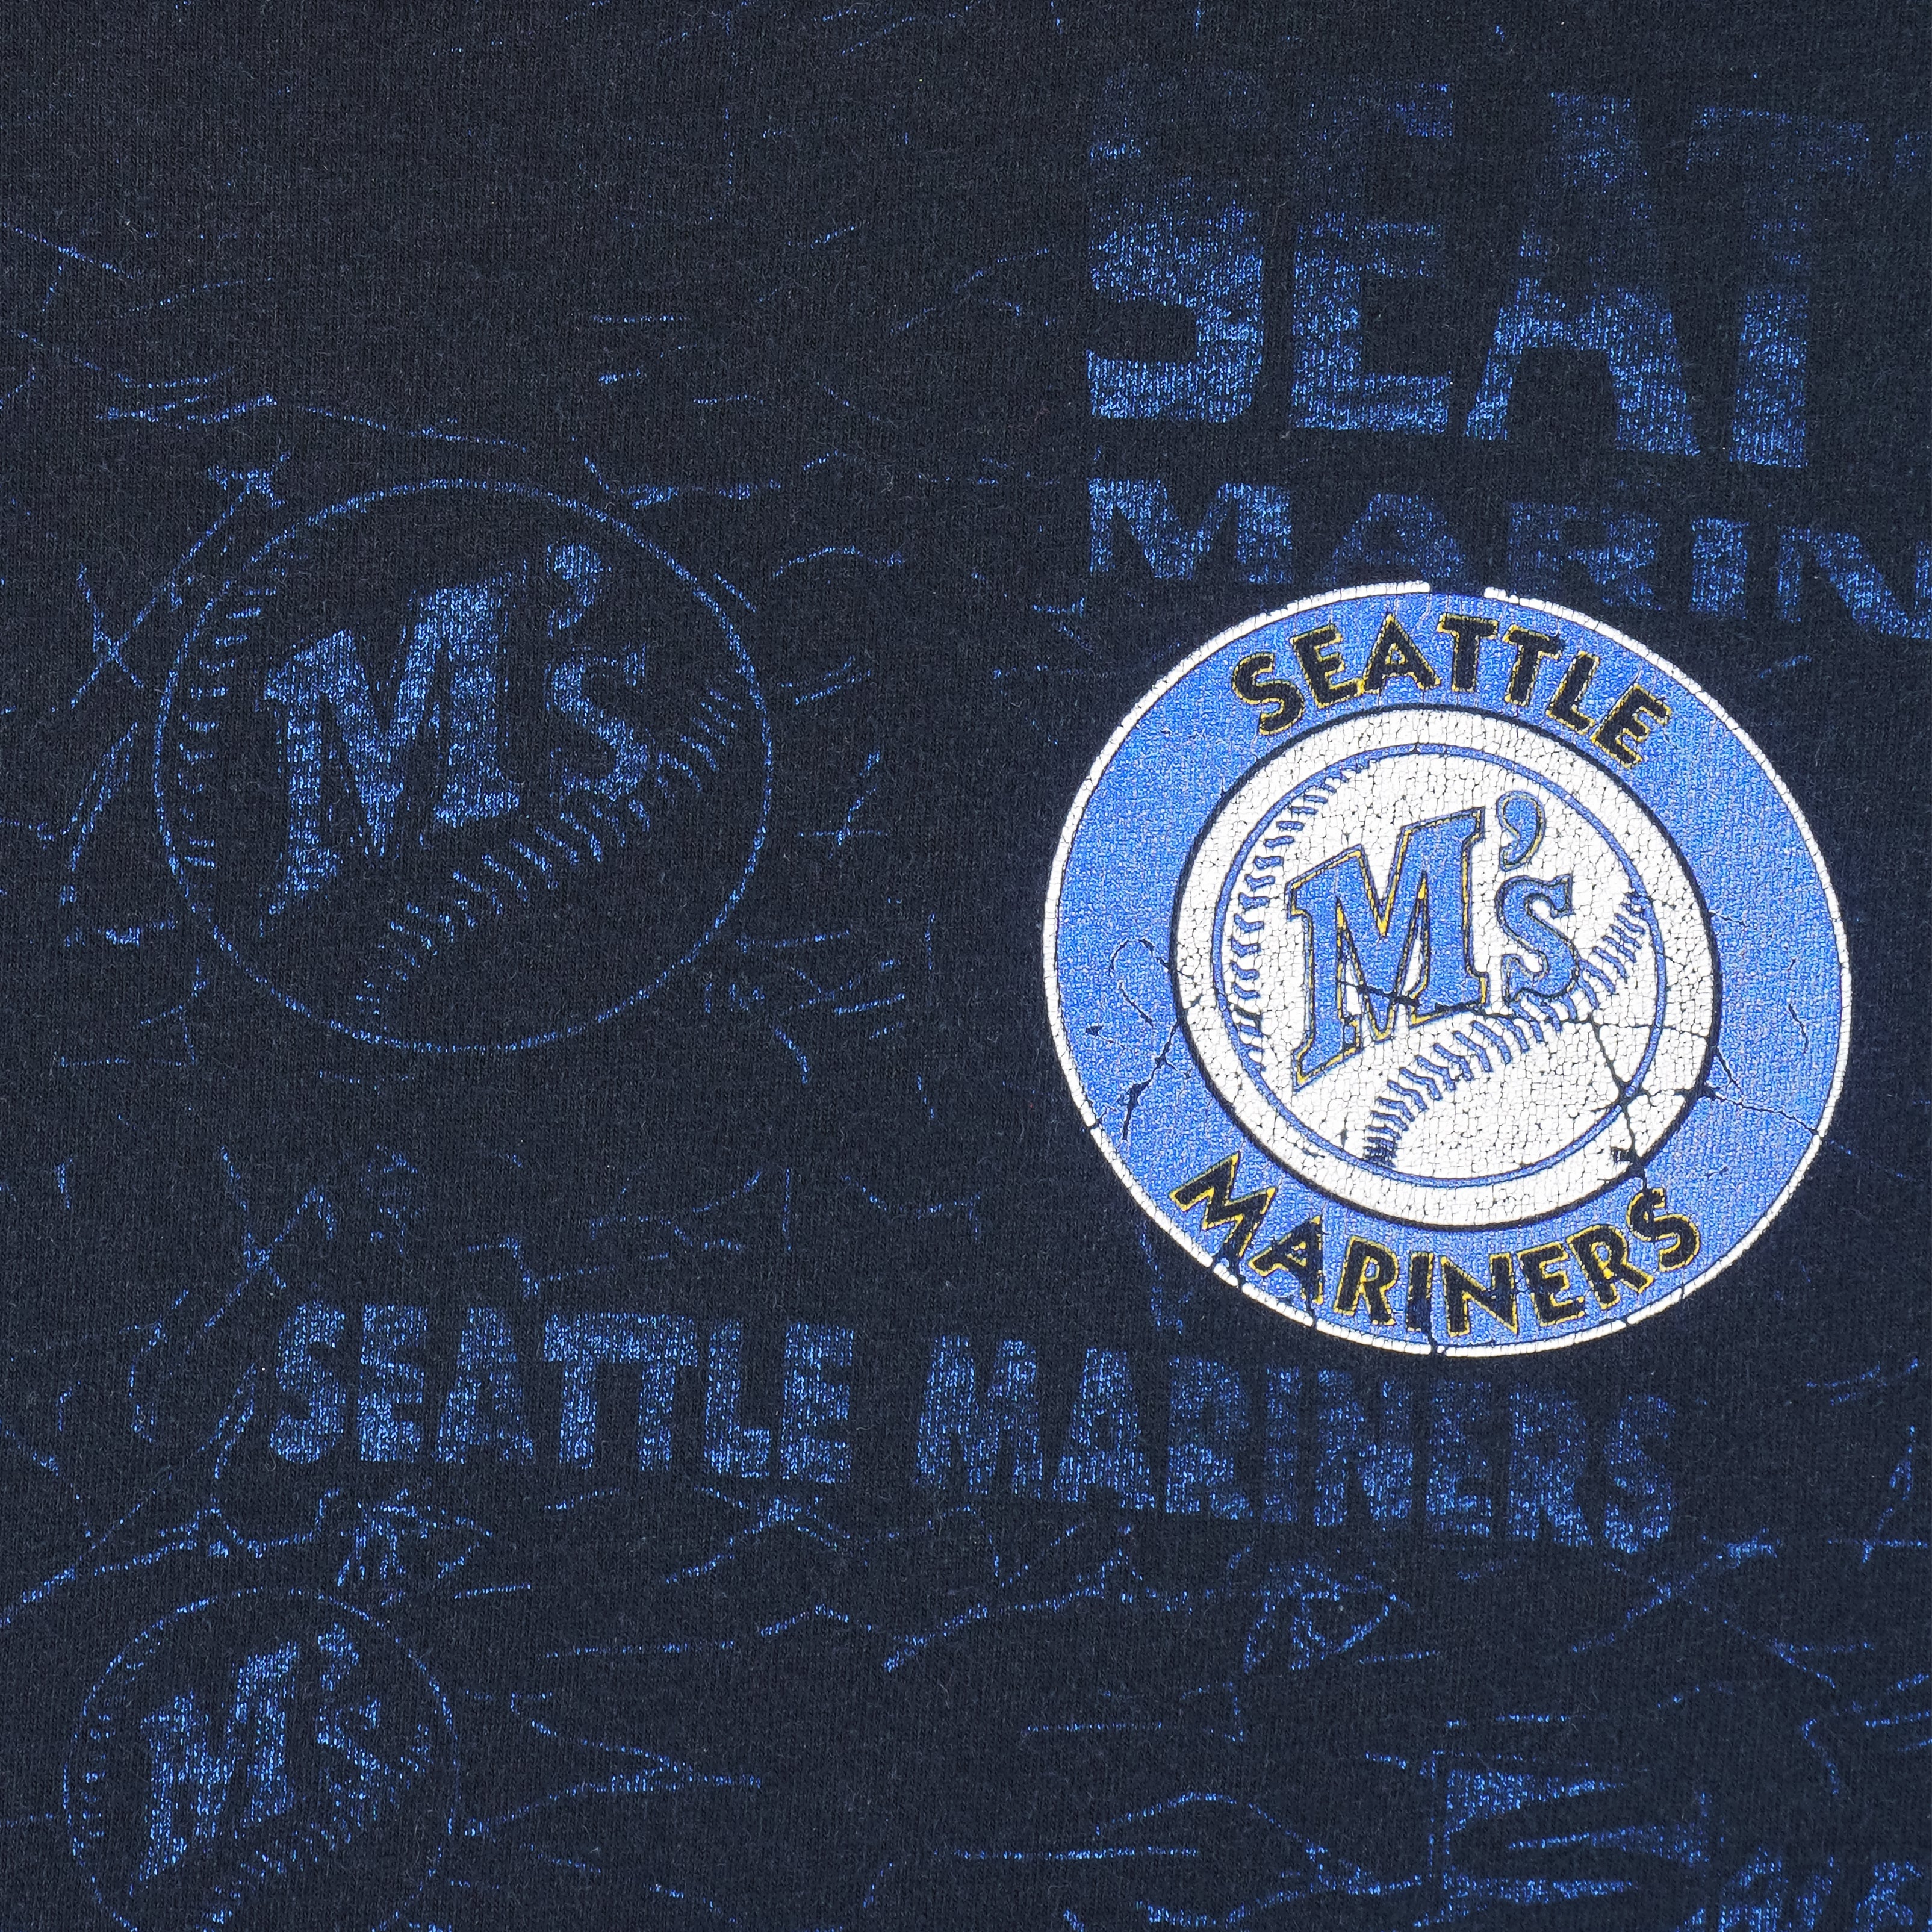 Vintage MLB (Lee) - Seattle Mariners Ichiro Suzuki T-Shirt 1990s X-Large